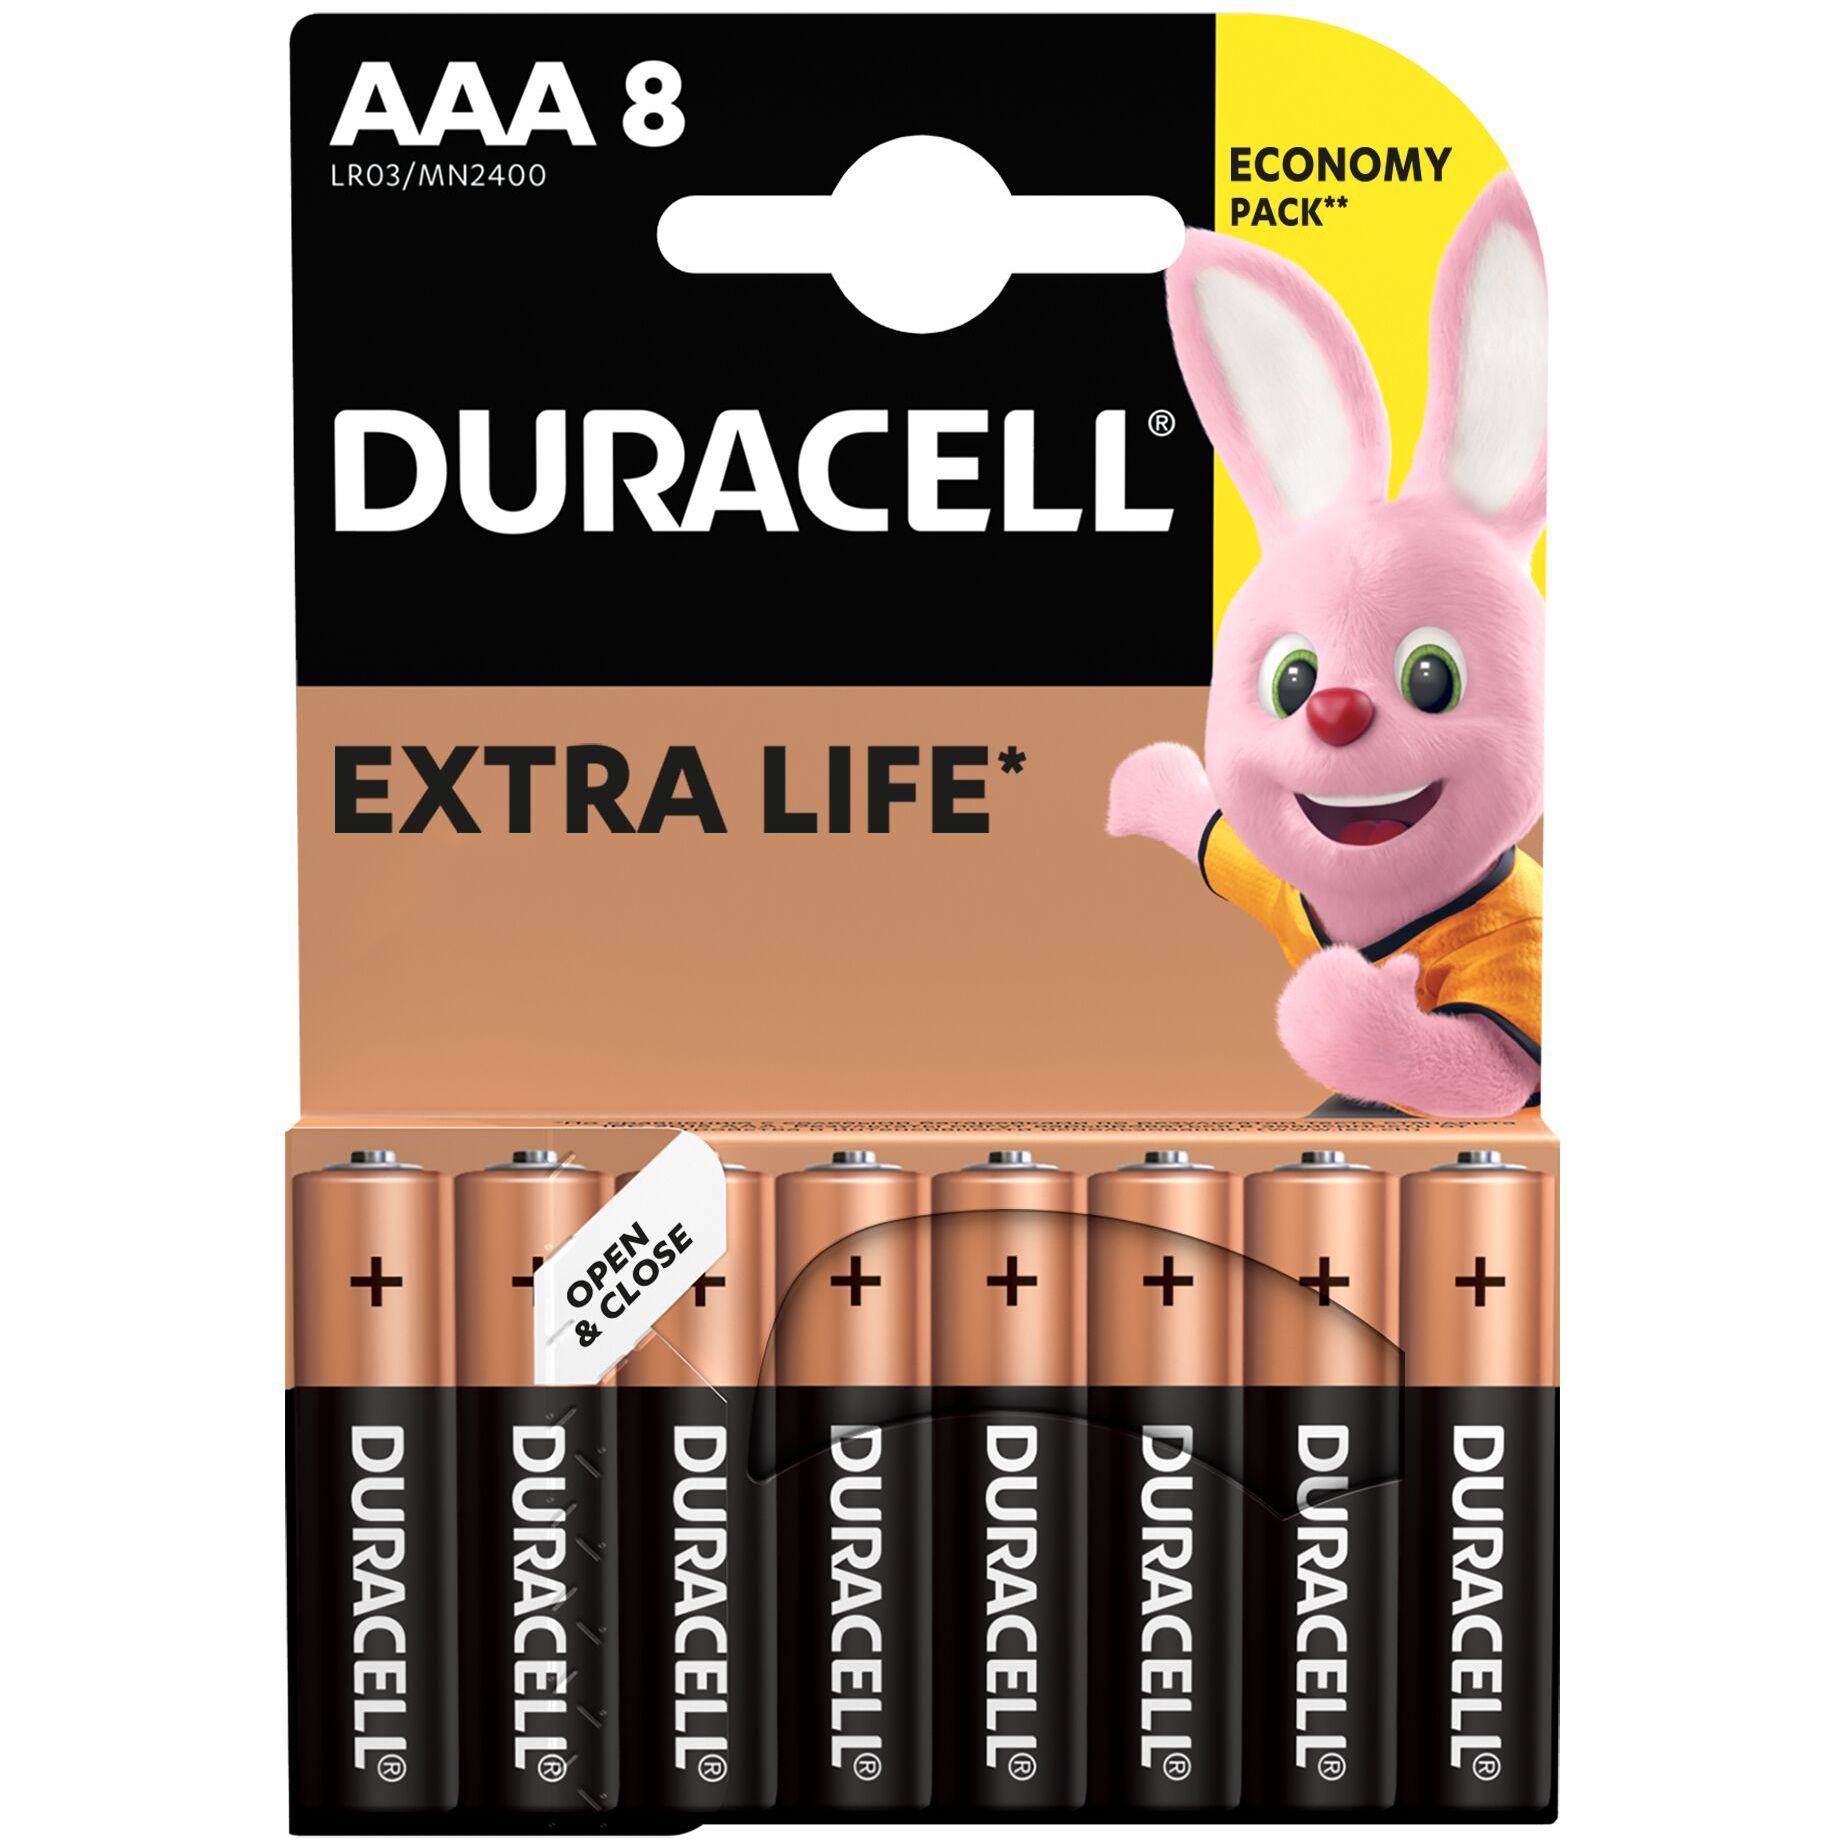 Щелочные батарейки мизинчиковые Duracell 1.5 V AAA LR03/MN2400, 8 шт. (706051) - фото 2